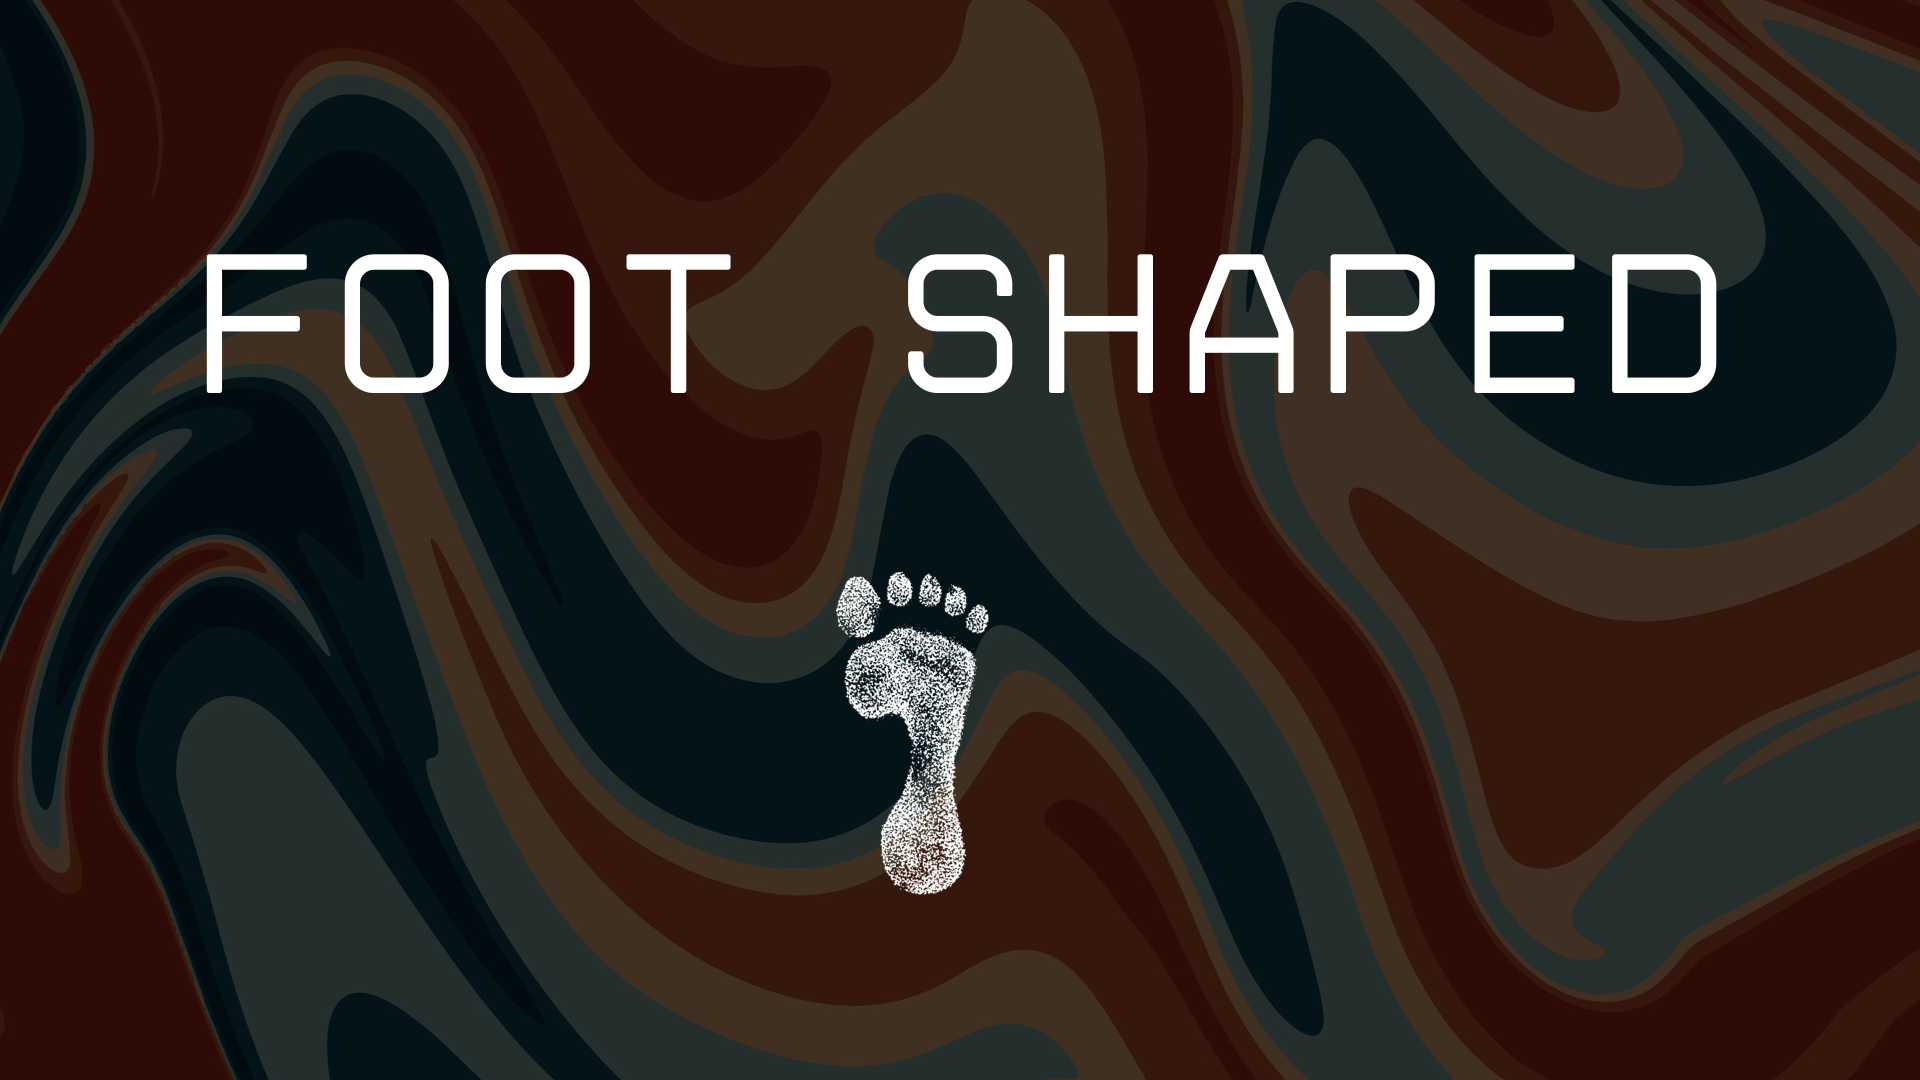 Foot Shaped